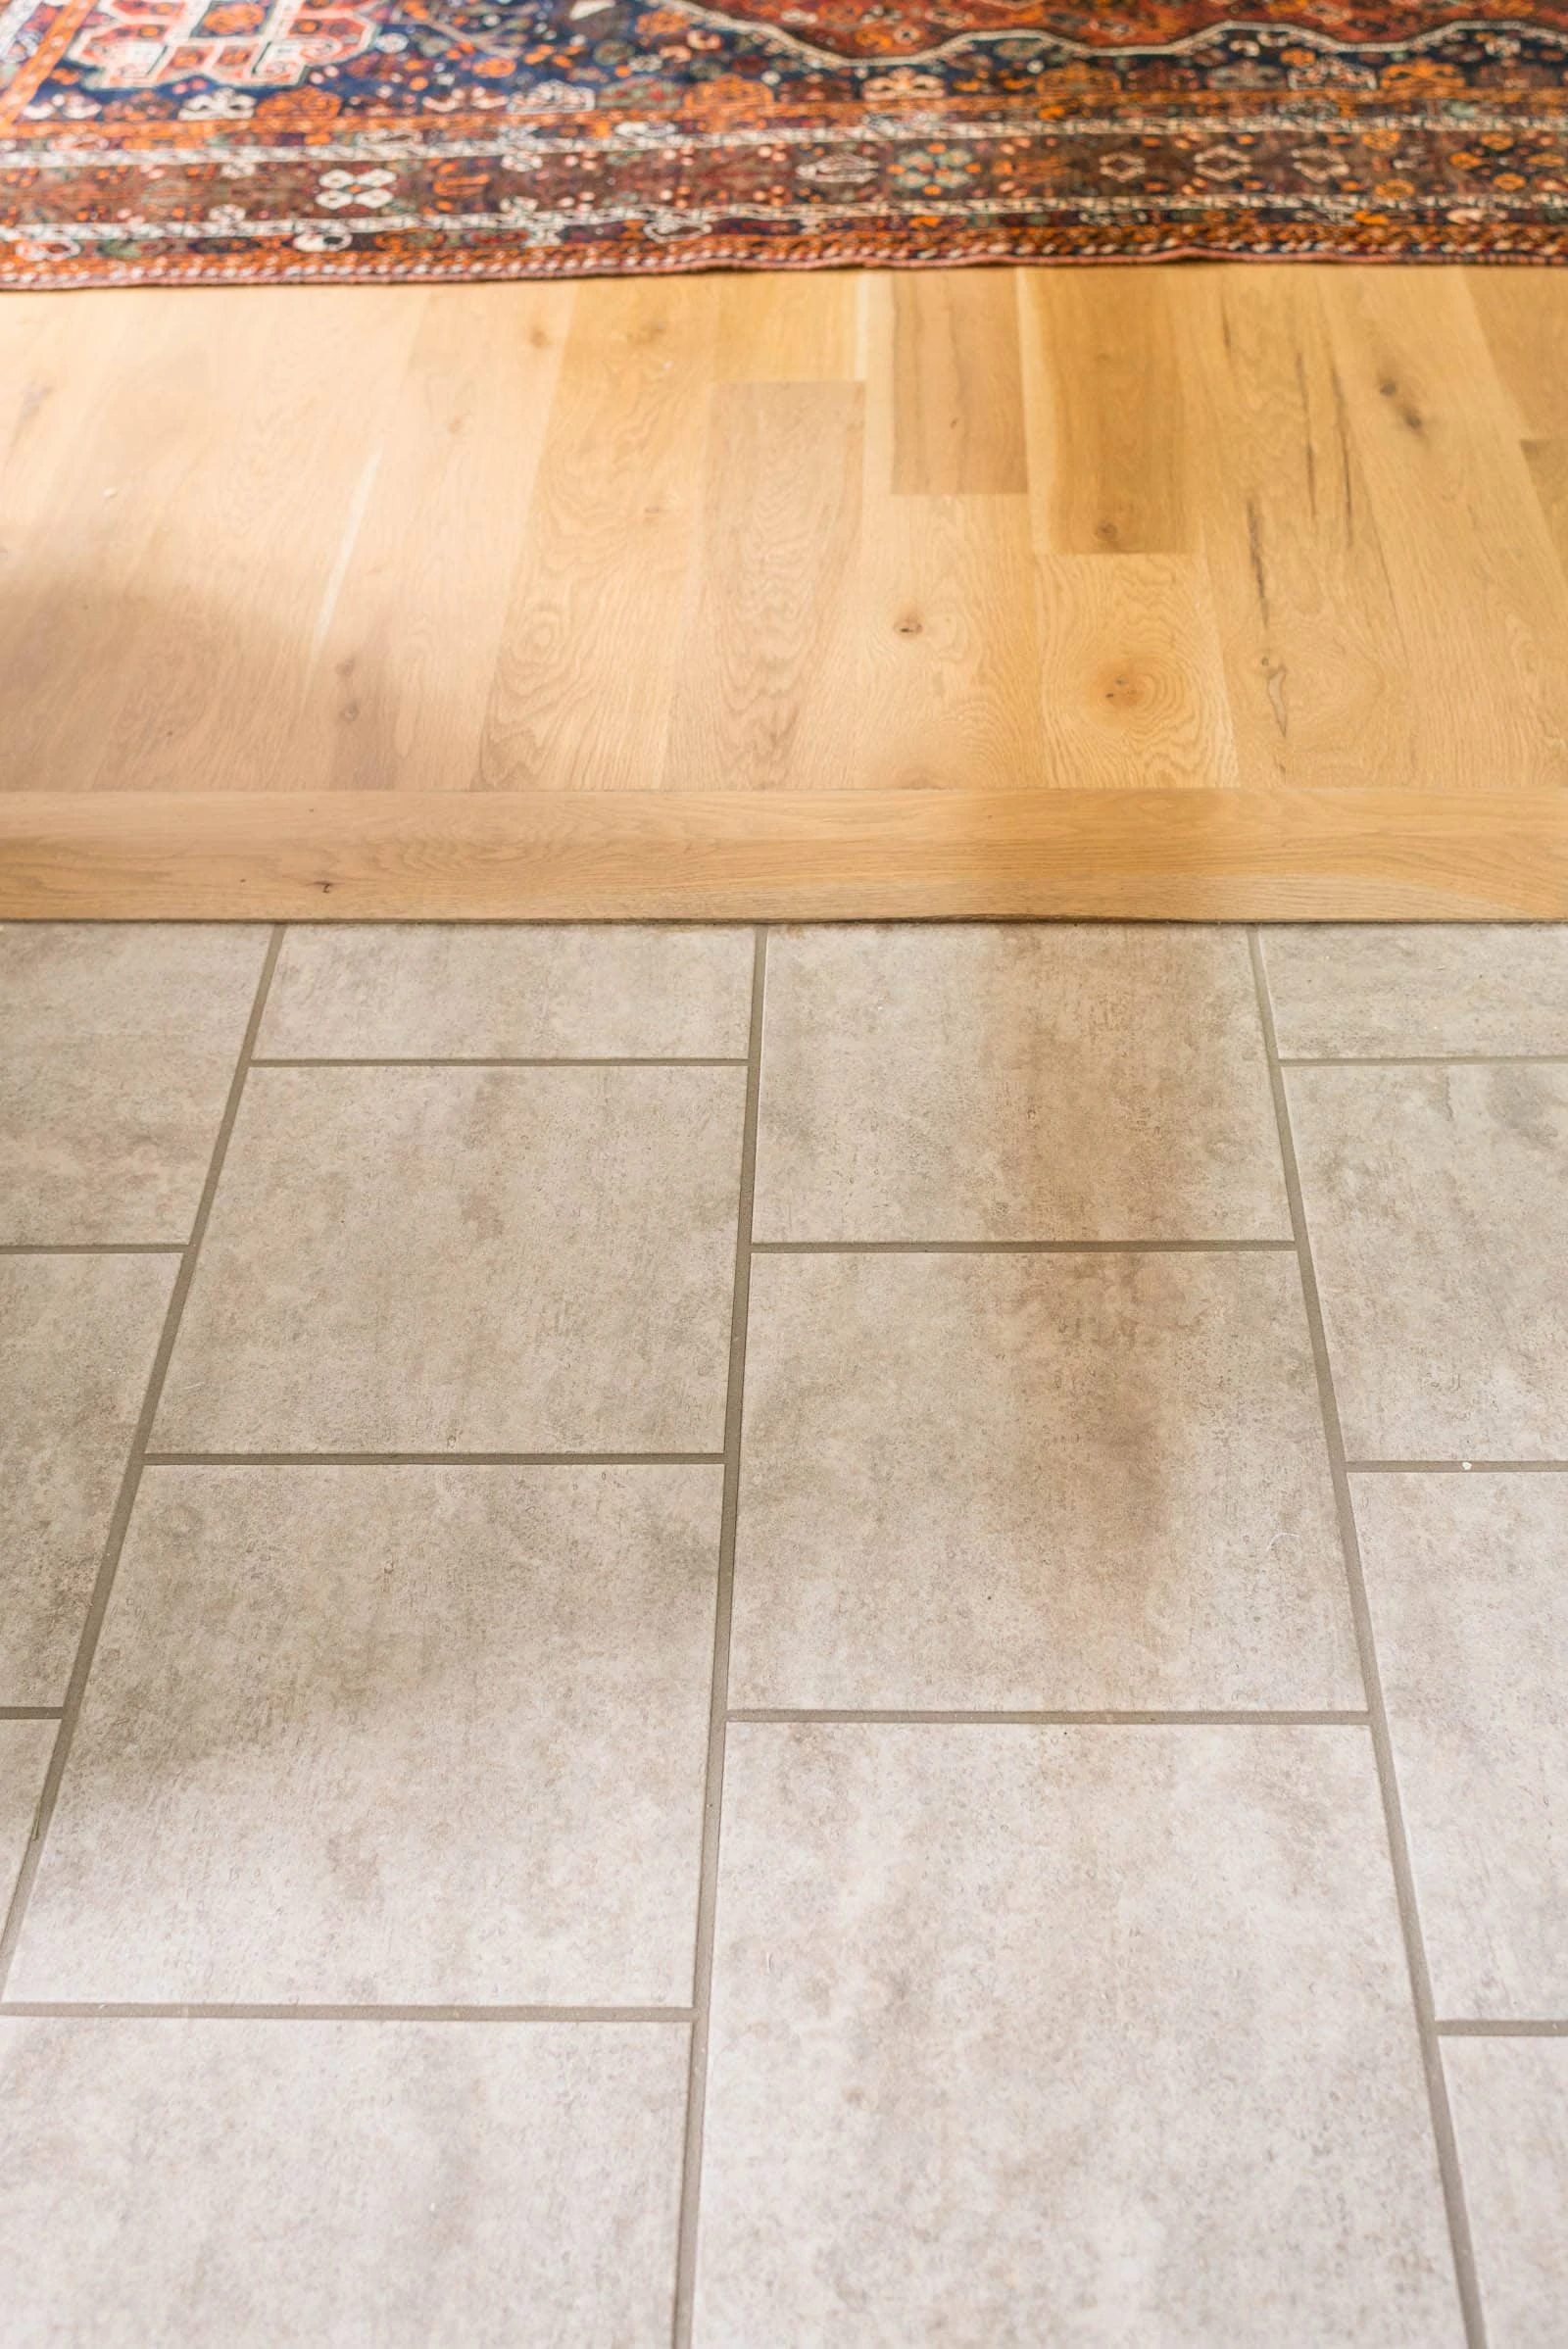 Peel and stick vinyl floor tile transition 